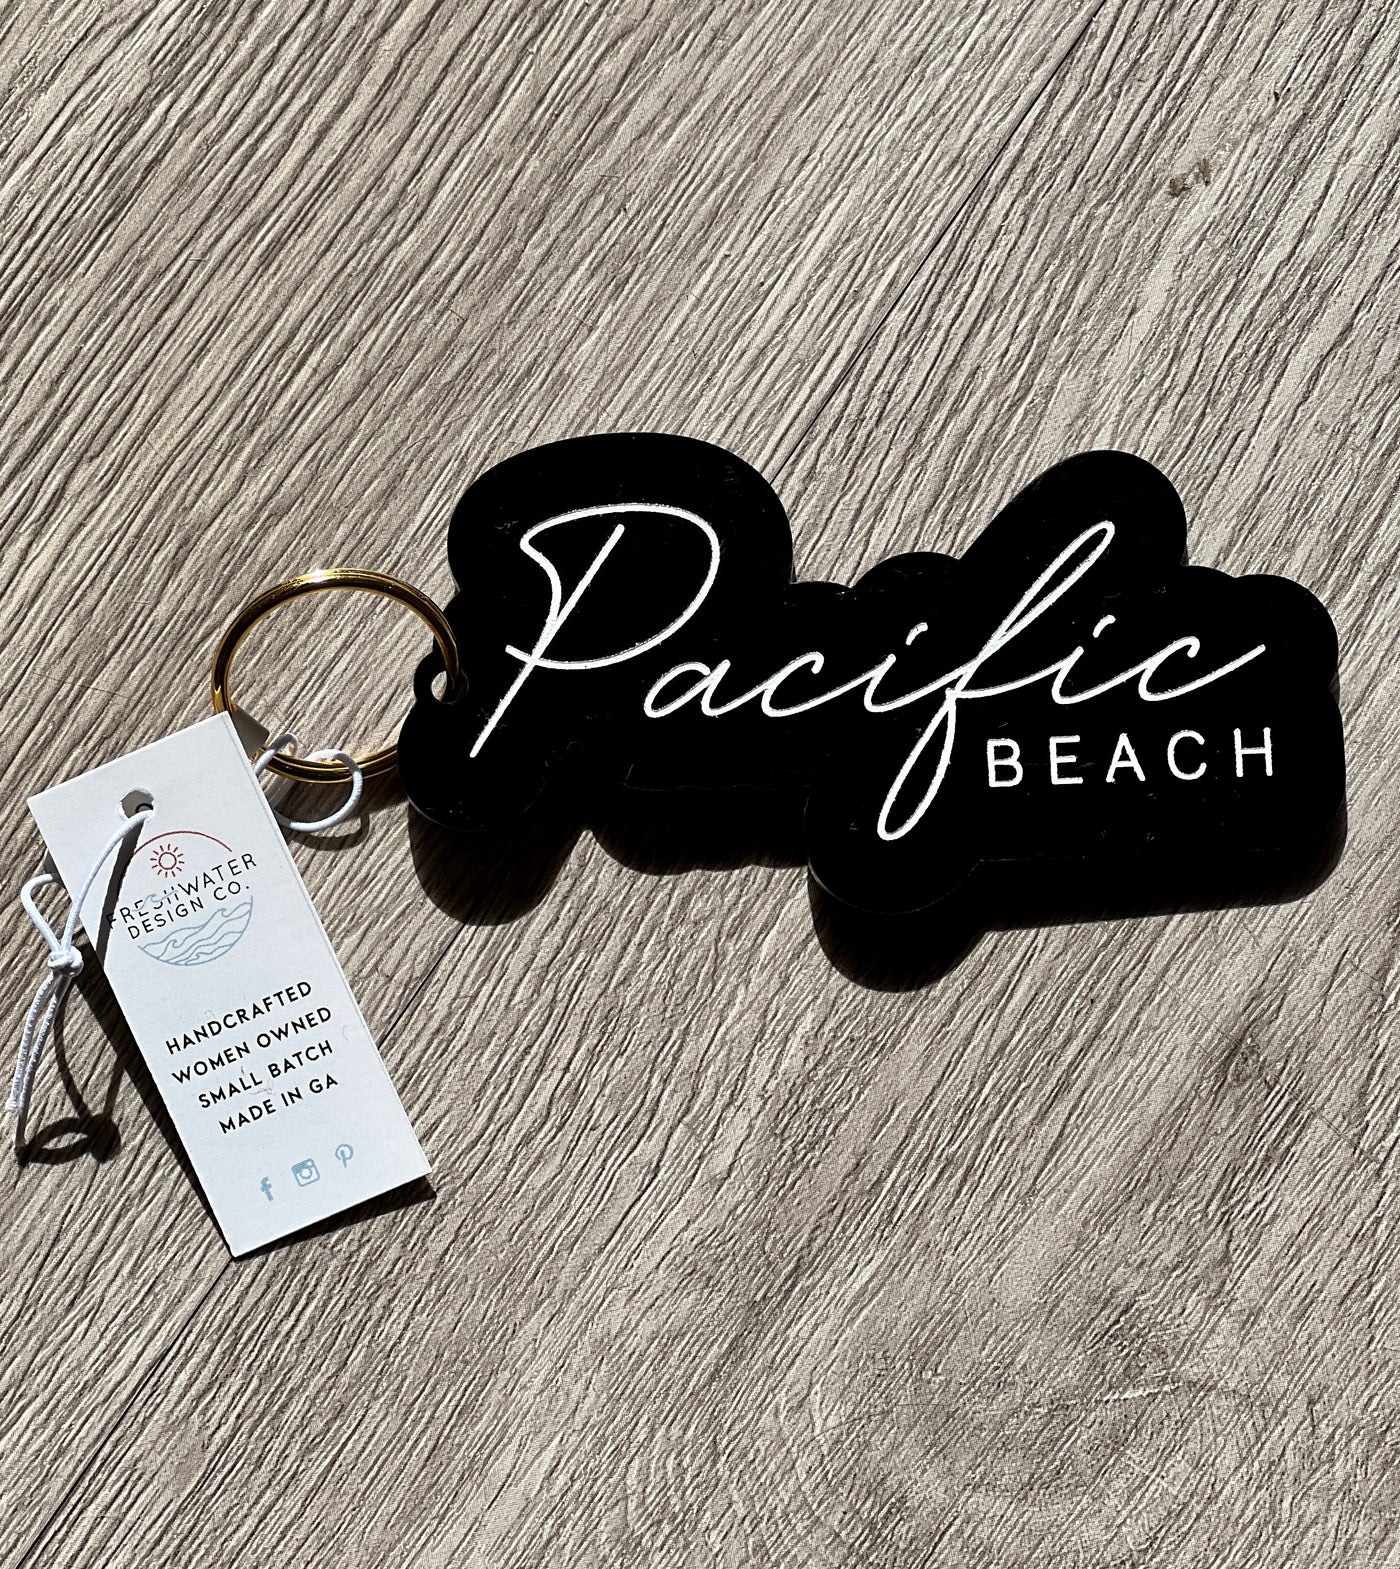 pacific beach keychain